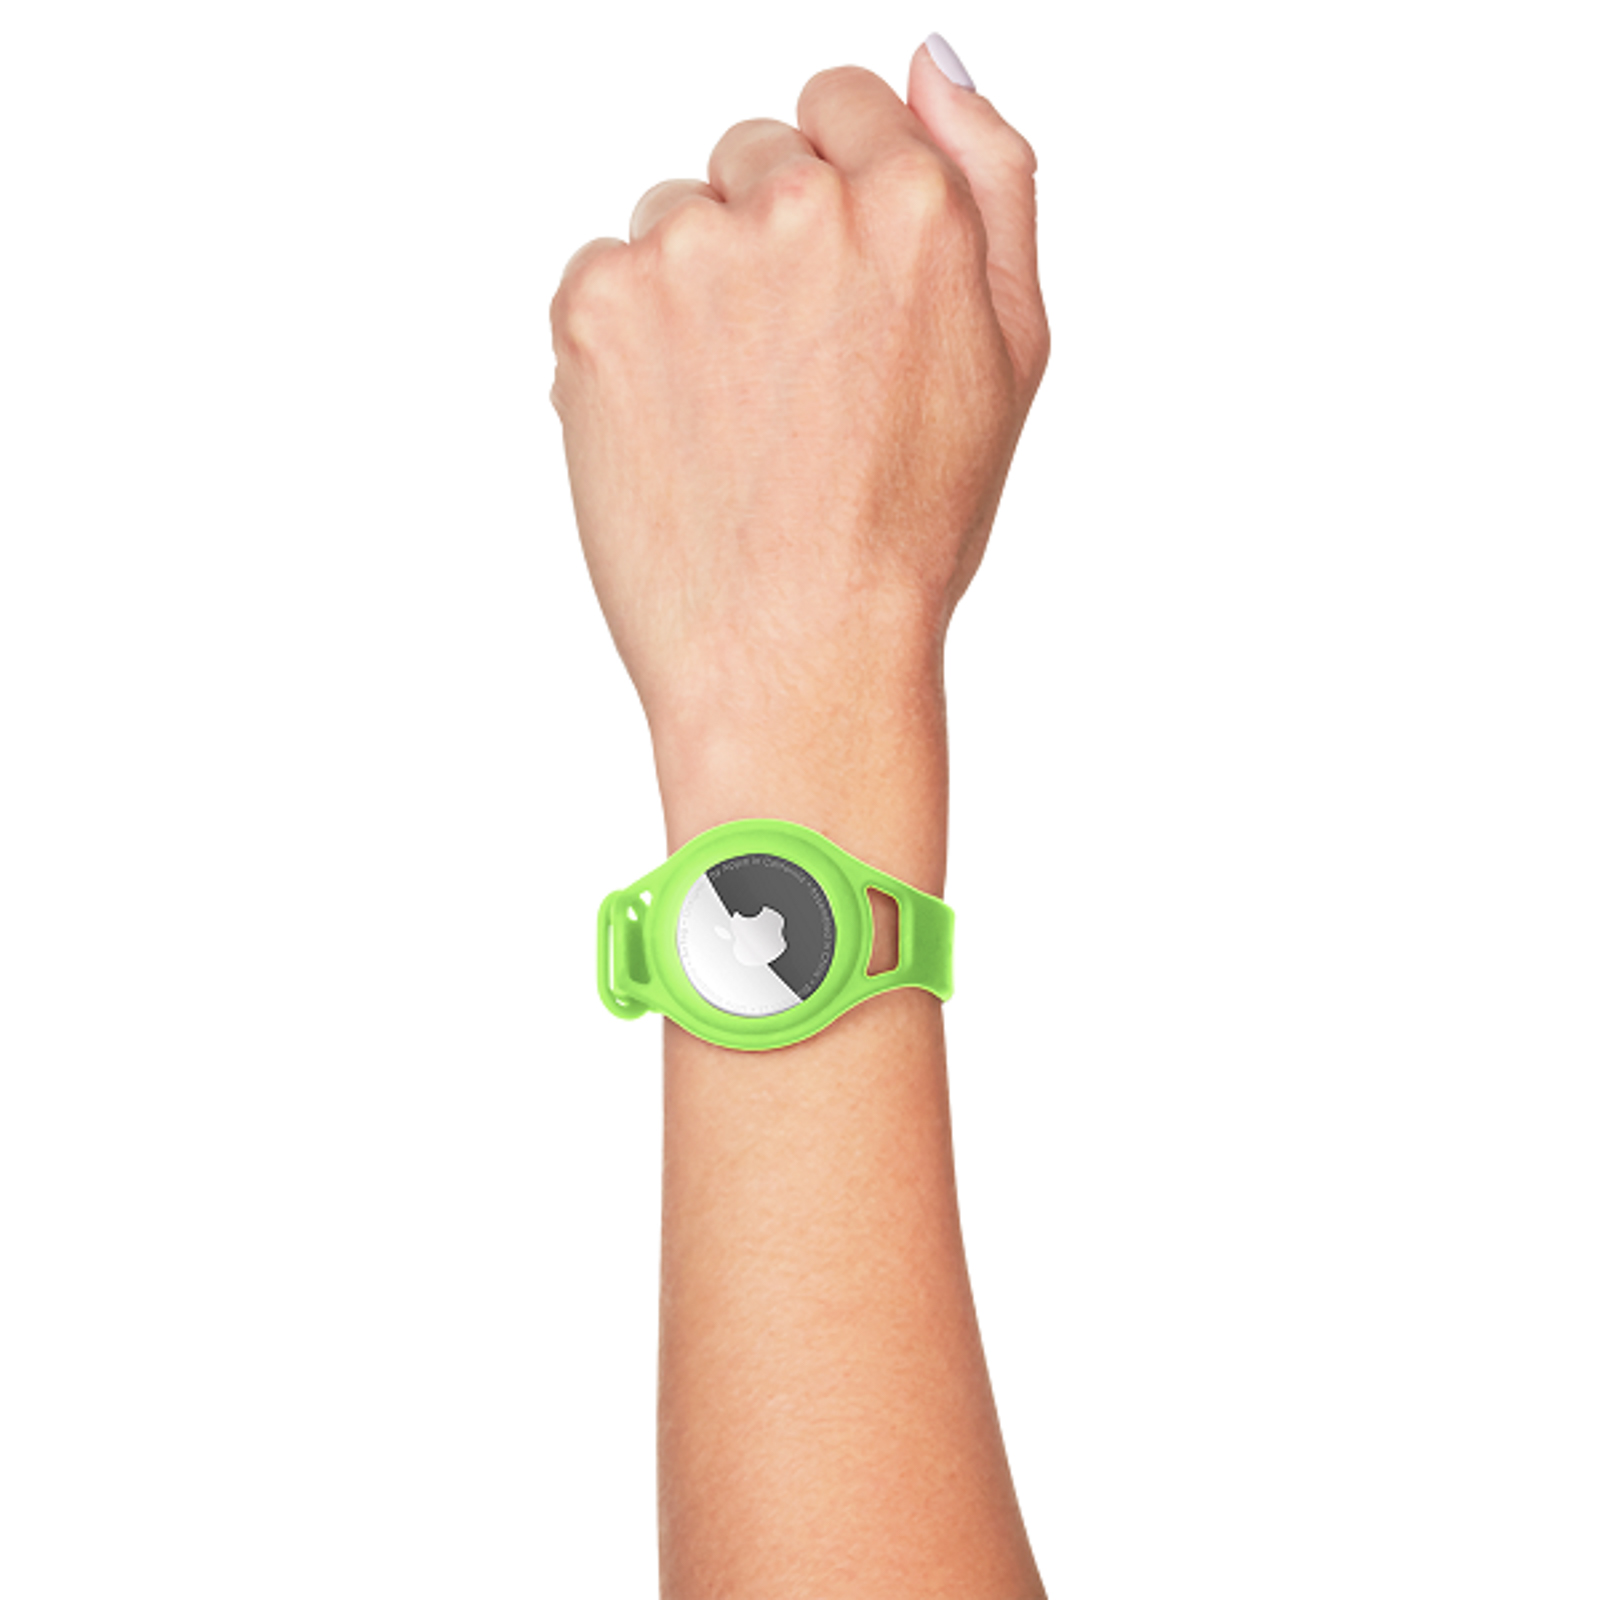 Kinder Zitronengrün CASE-MATE Silikon-Armband AirTag Armbänder